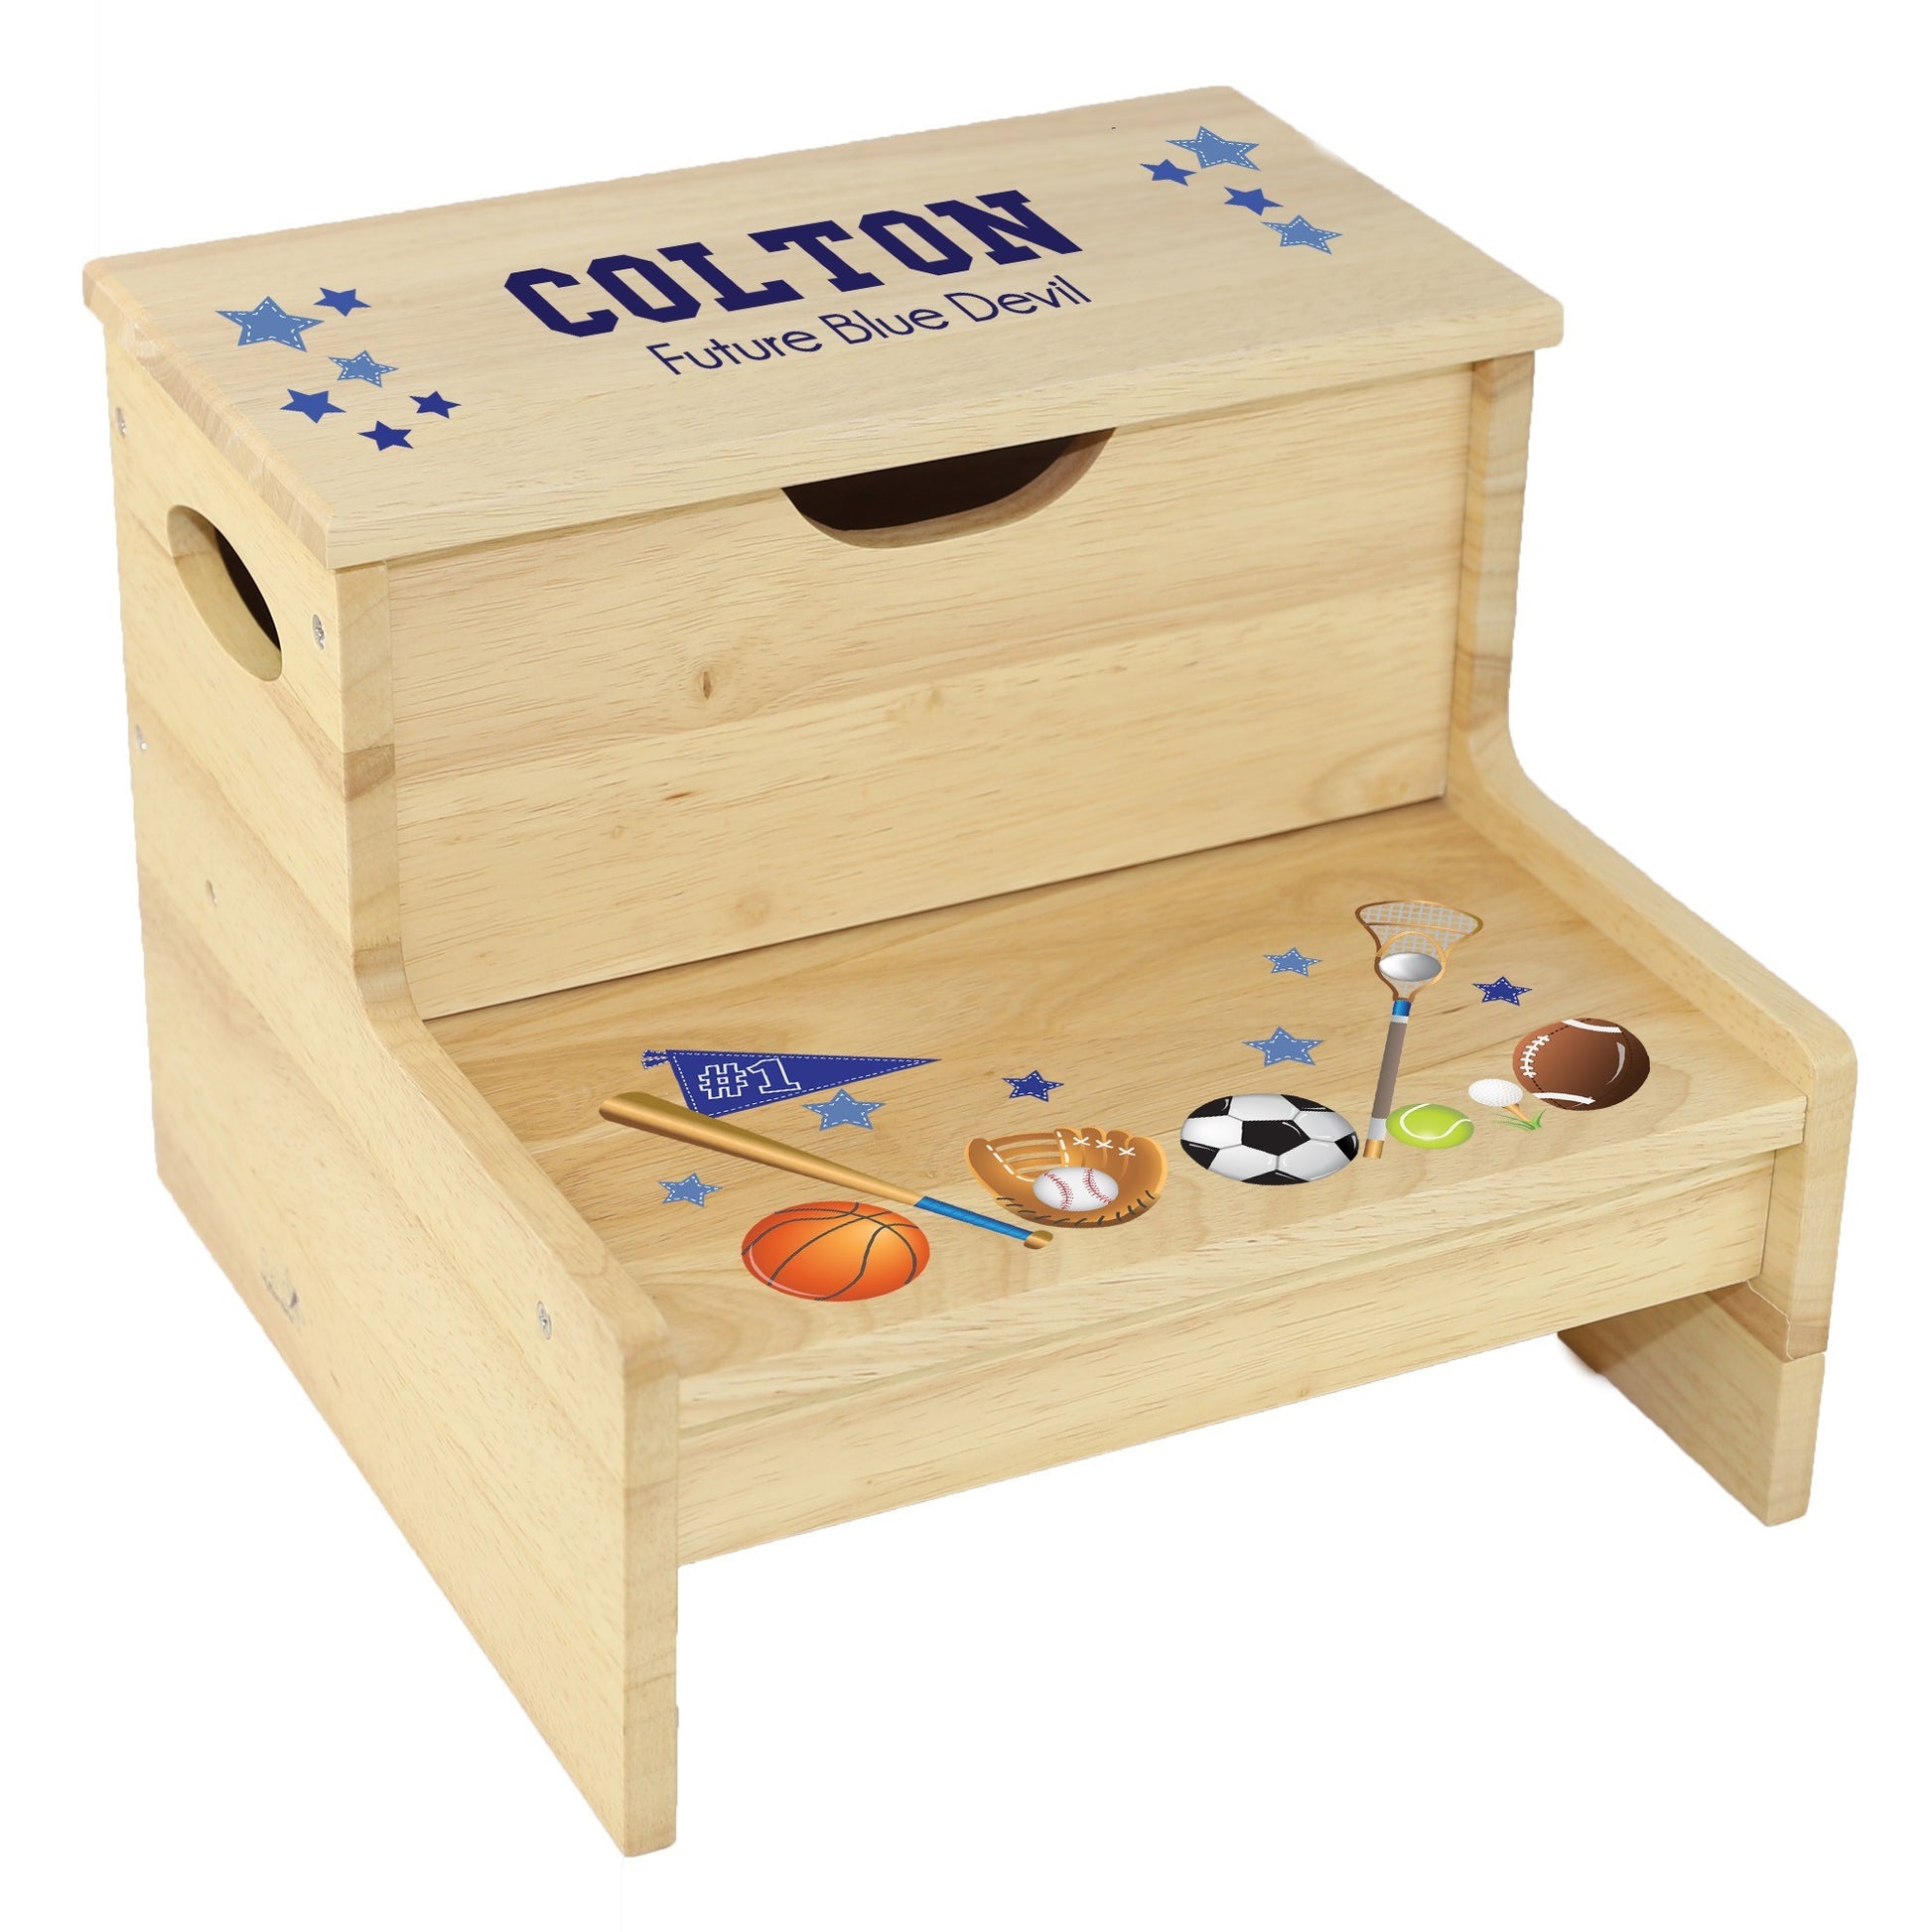 natural wood storage step stool sports design for boy